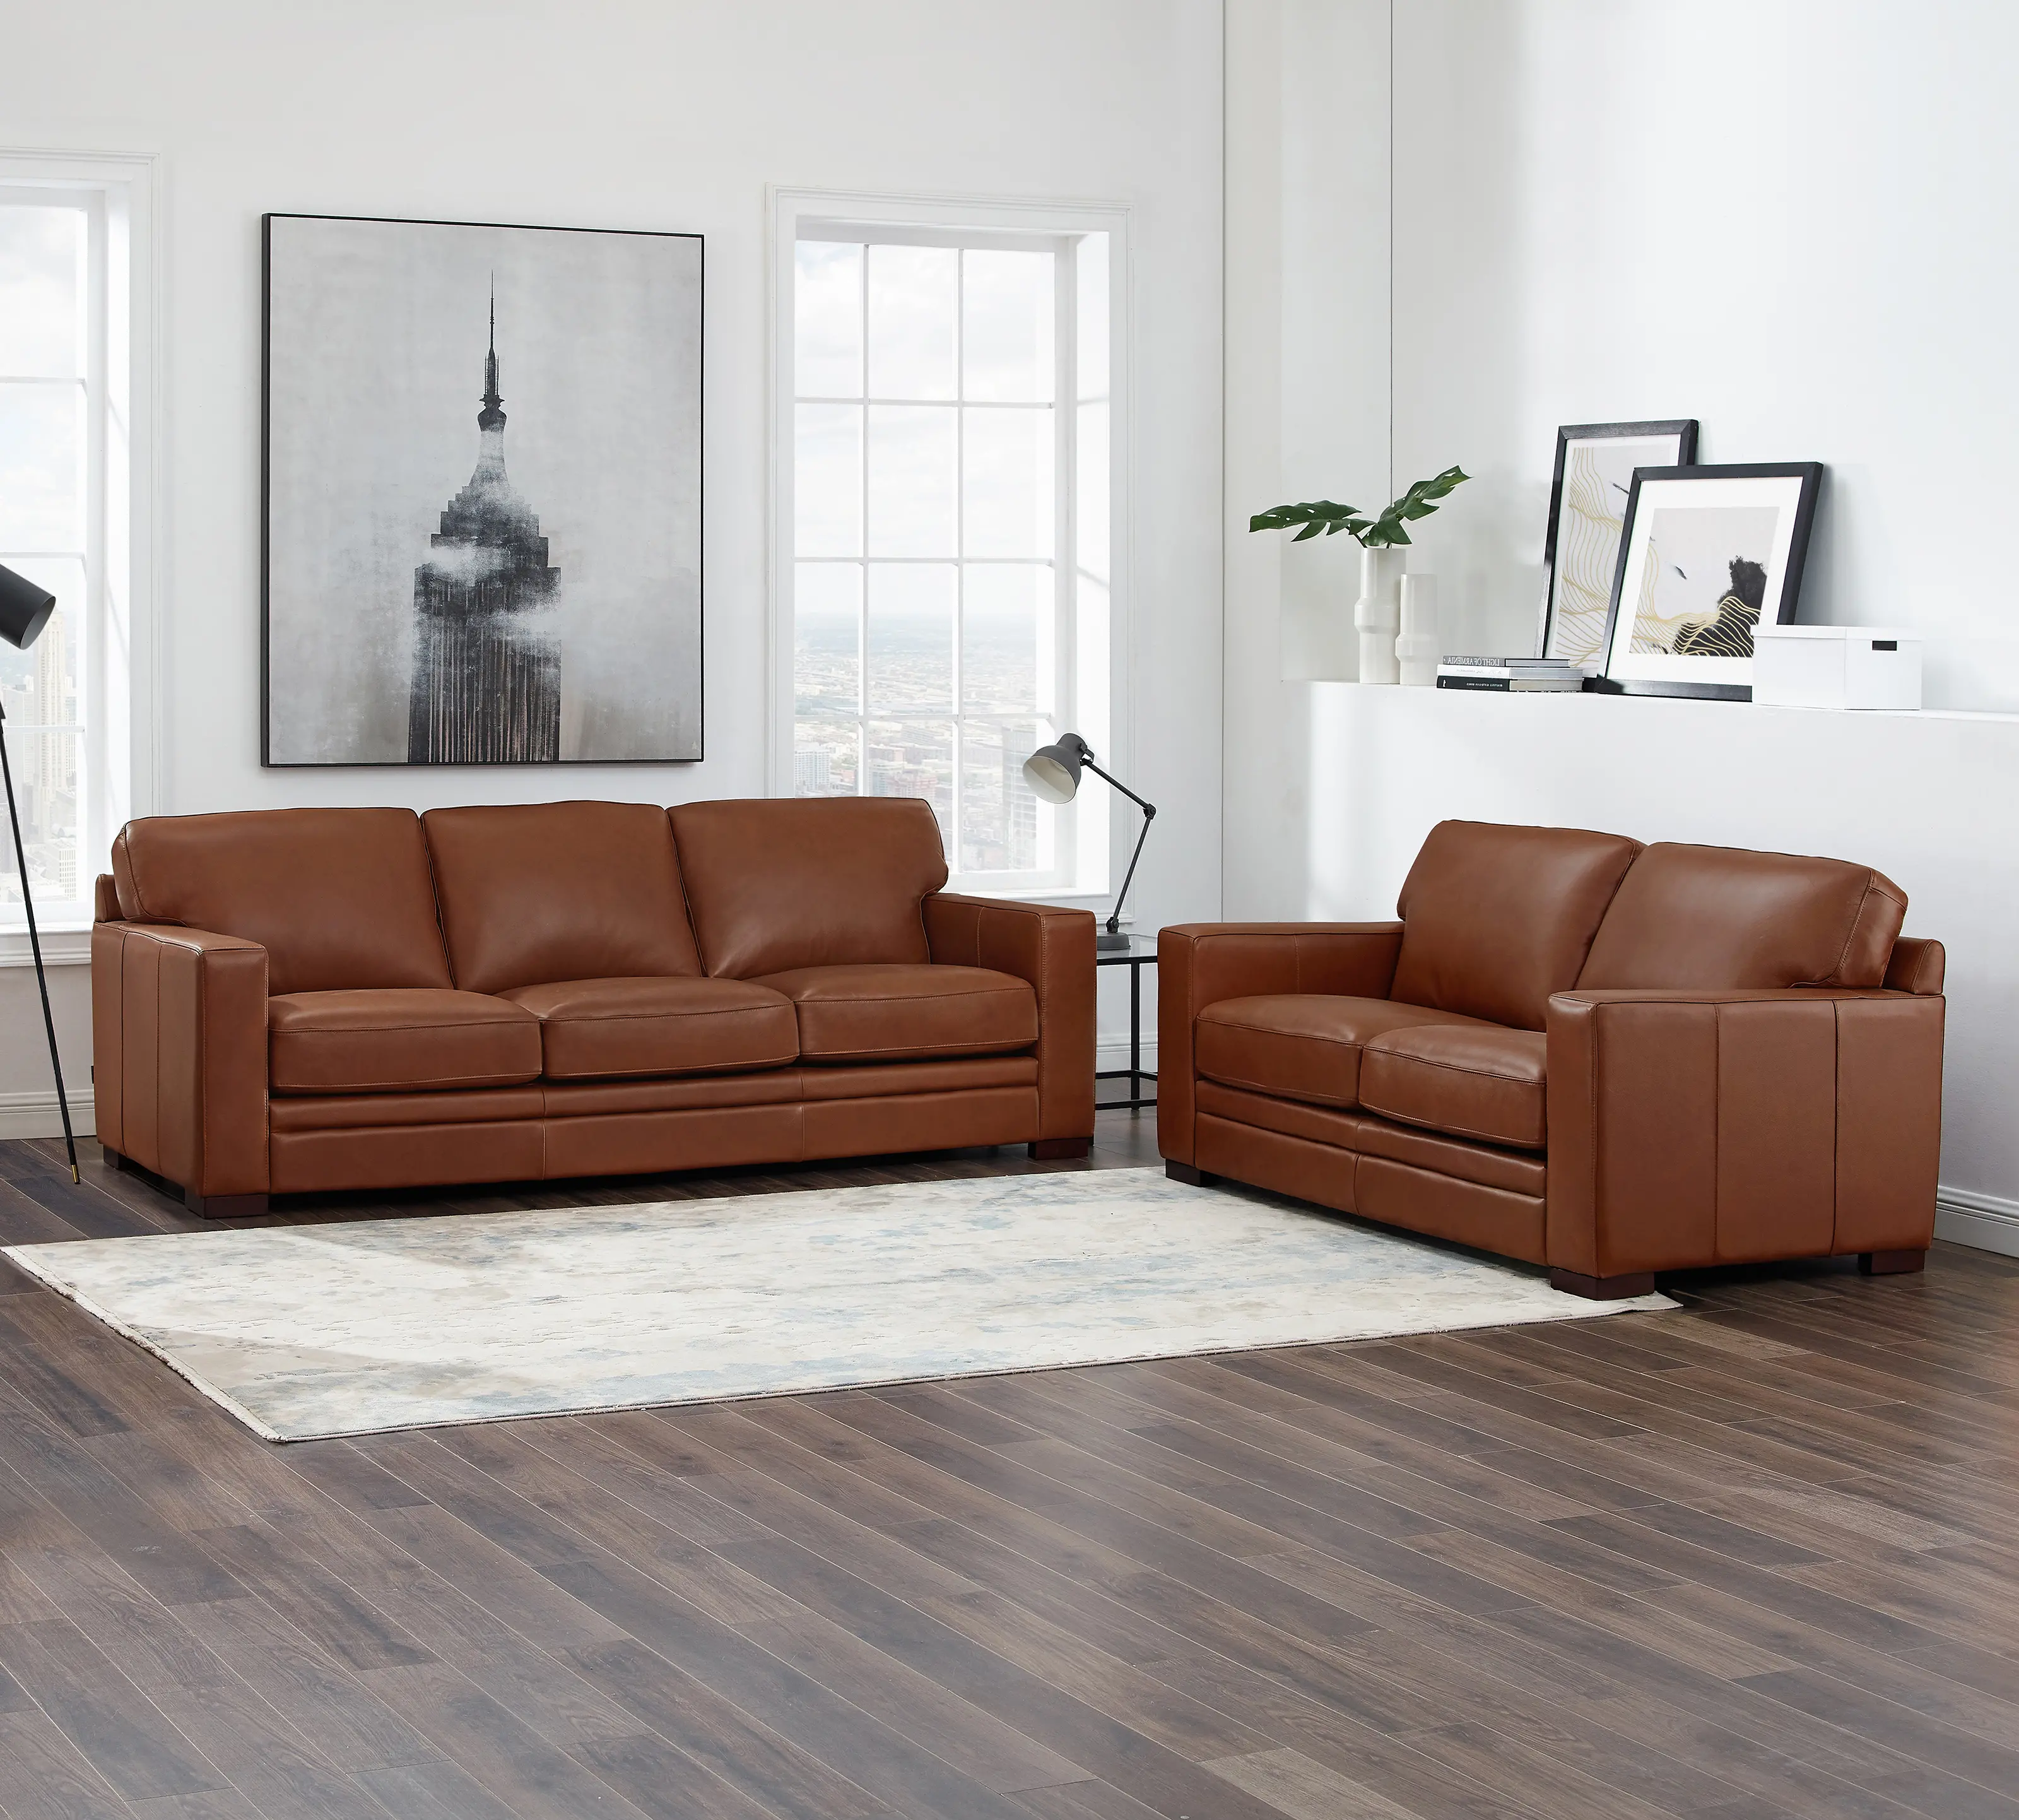 9927-SL-2362 Chatsworth Brown Leather 2 Piece Living Room Set - sku 9927-SL-2362